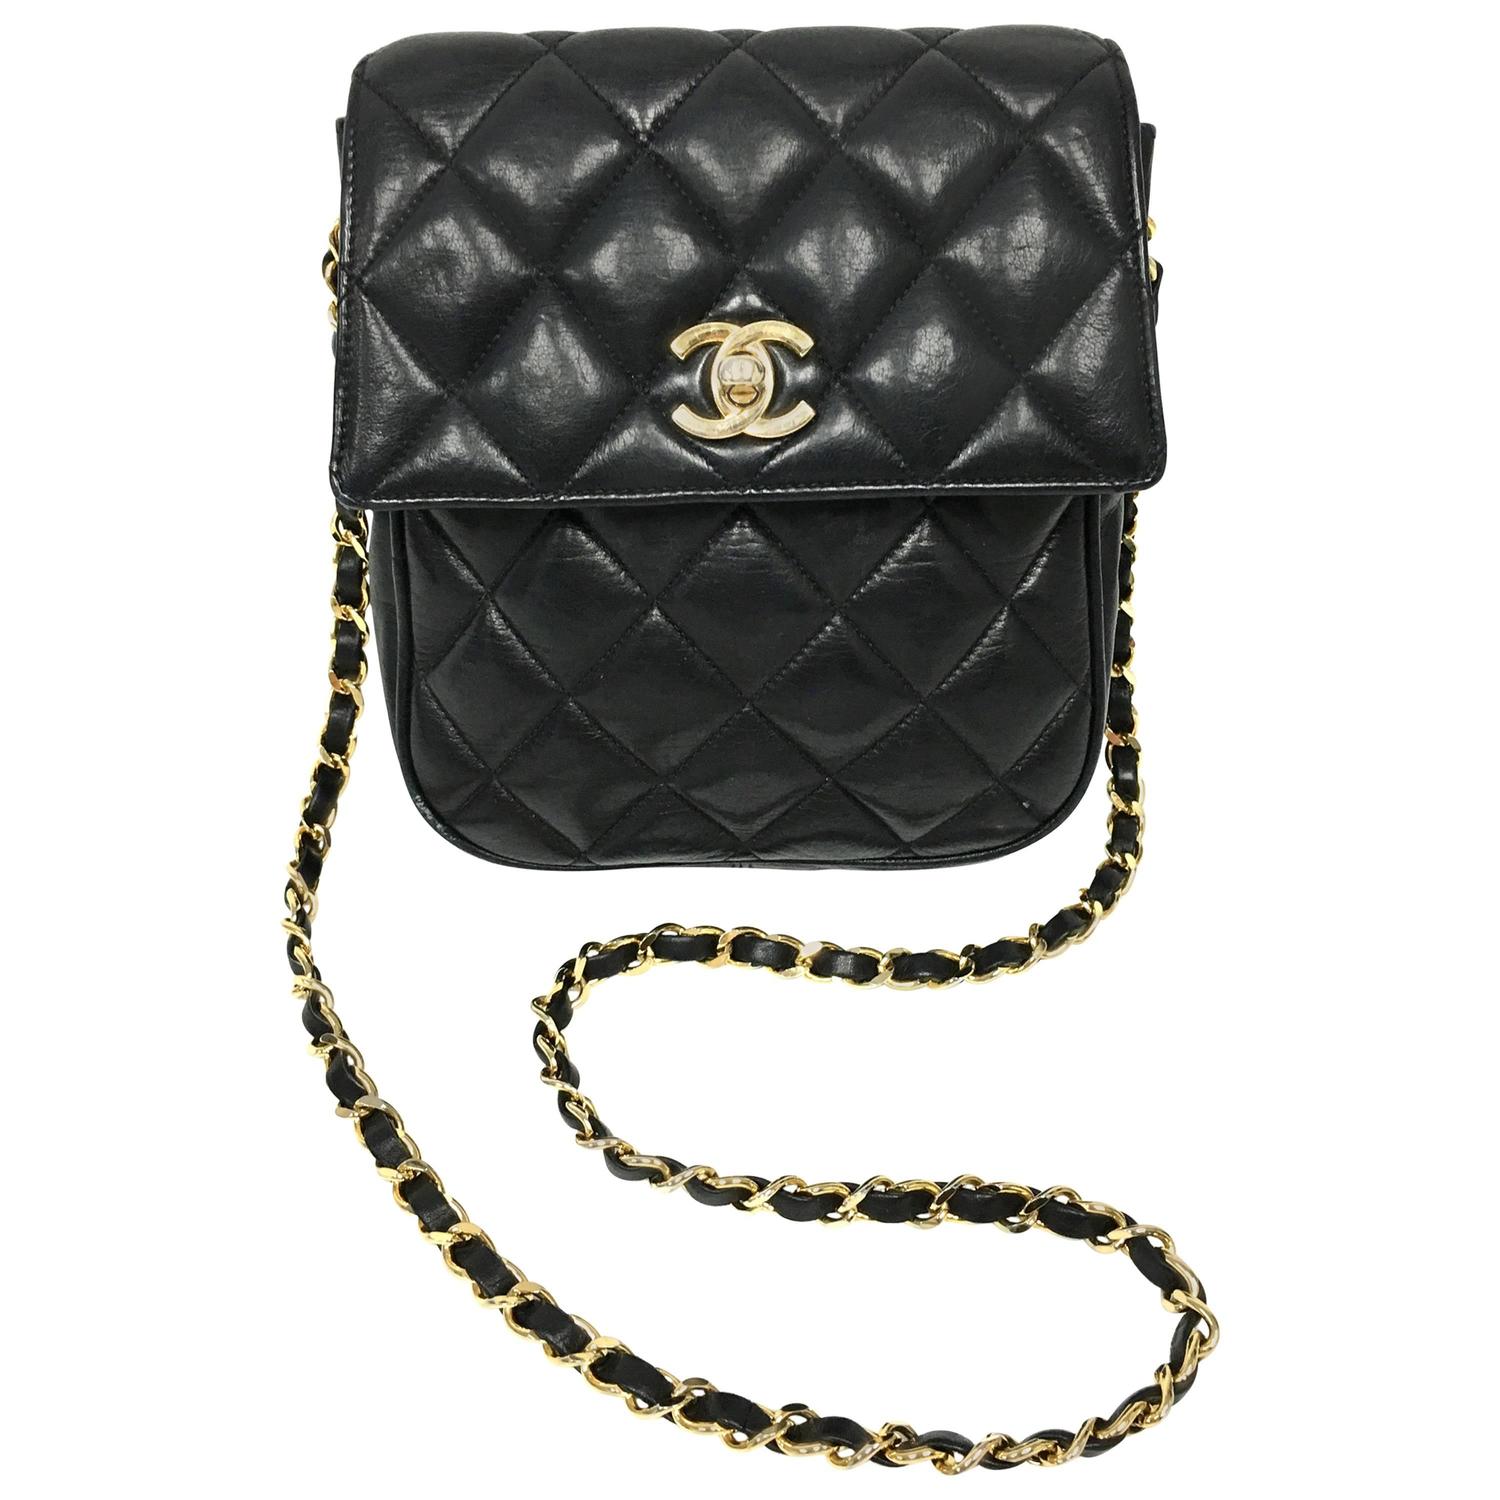 Vintage Chanel Black Lambskin Leather Mini Cross Body Flap Bag at 1stdibs